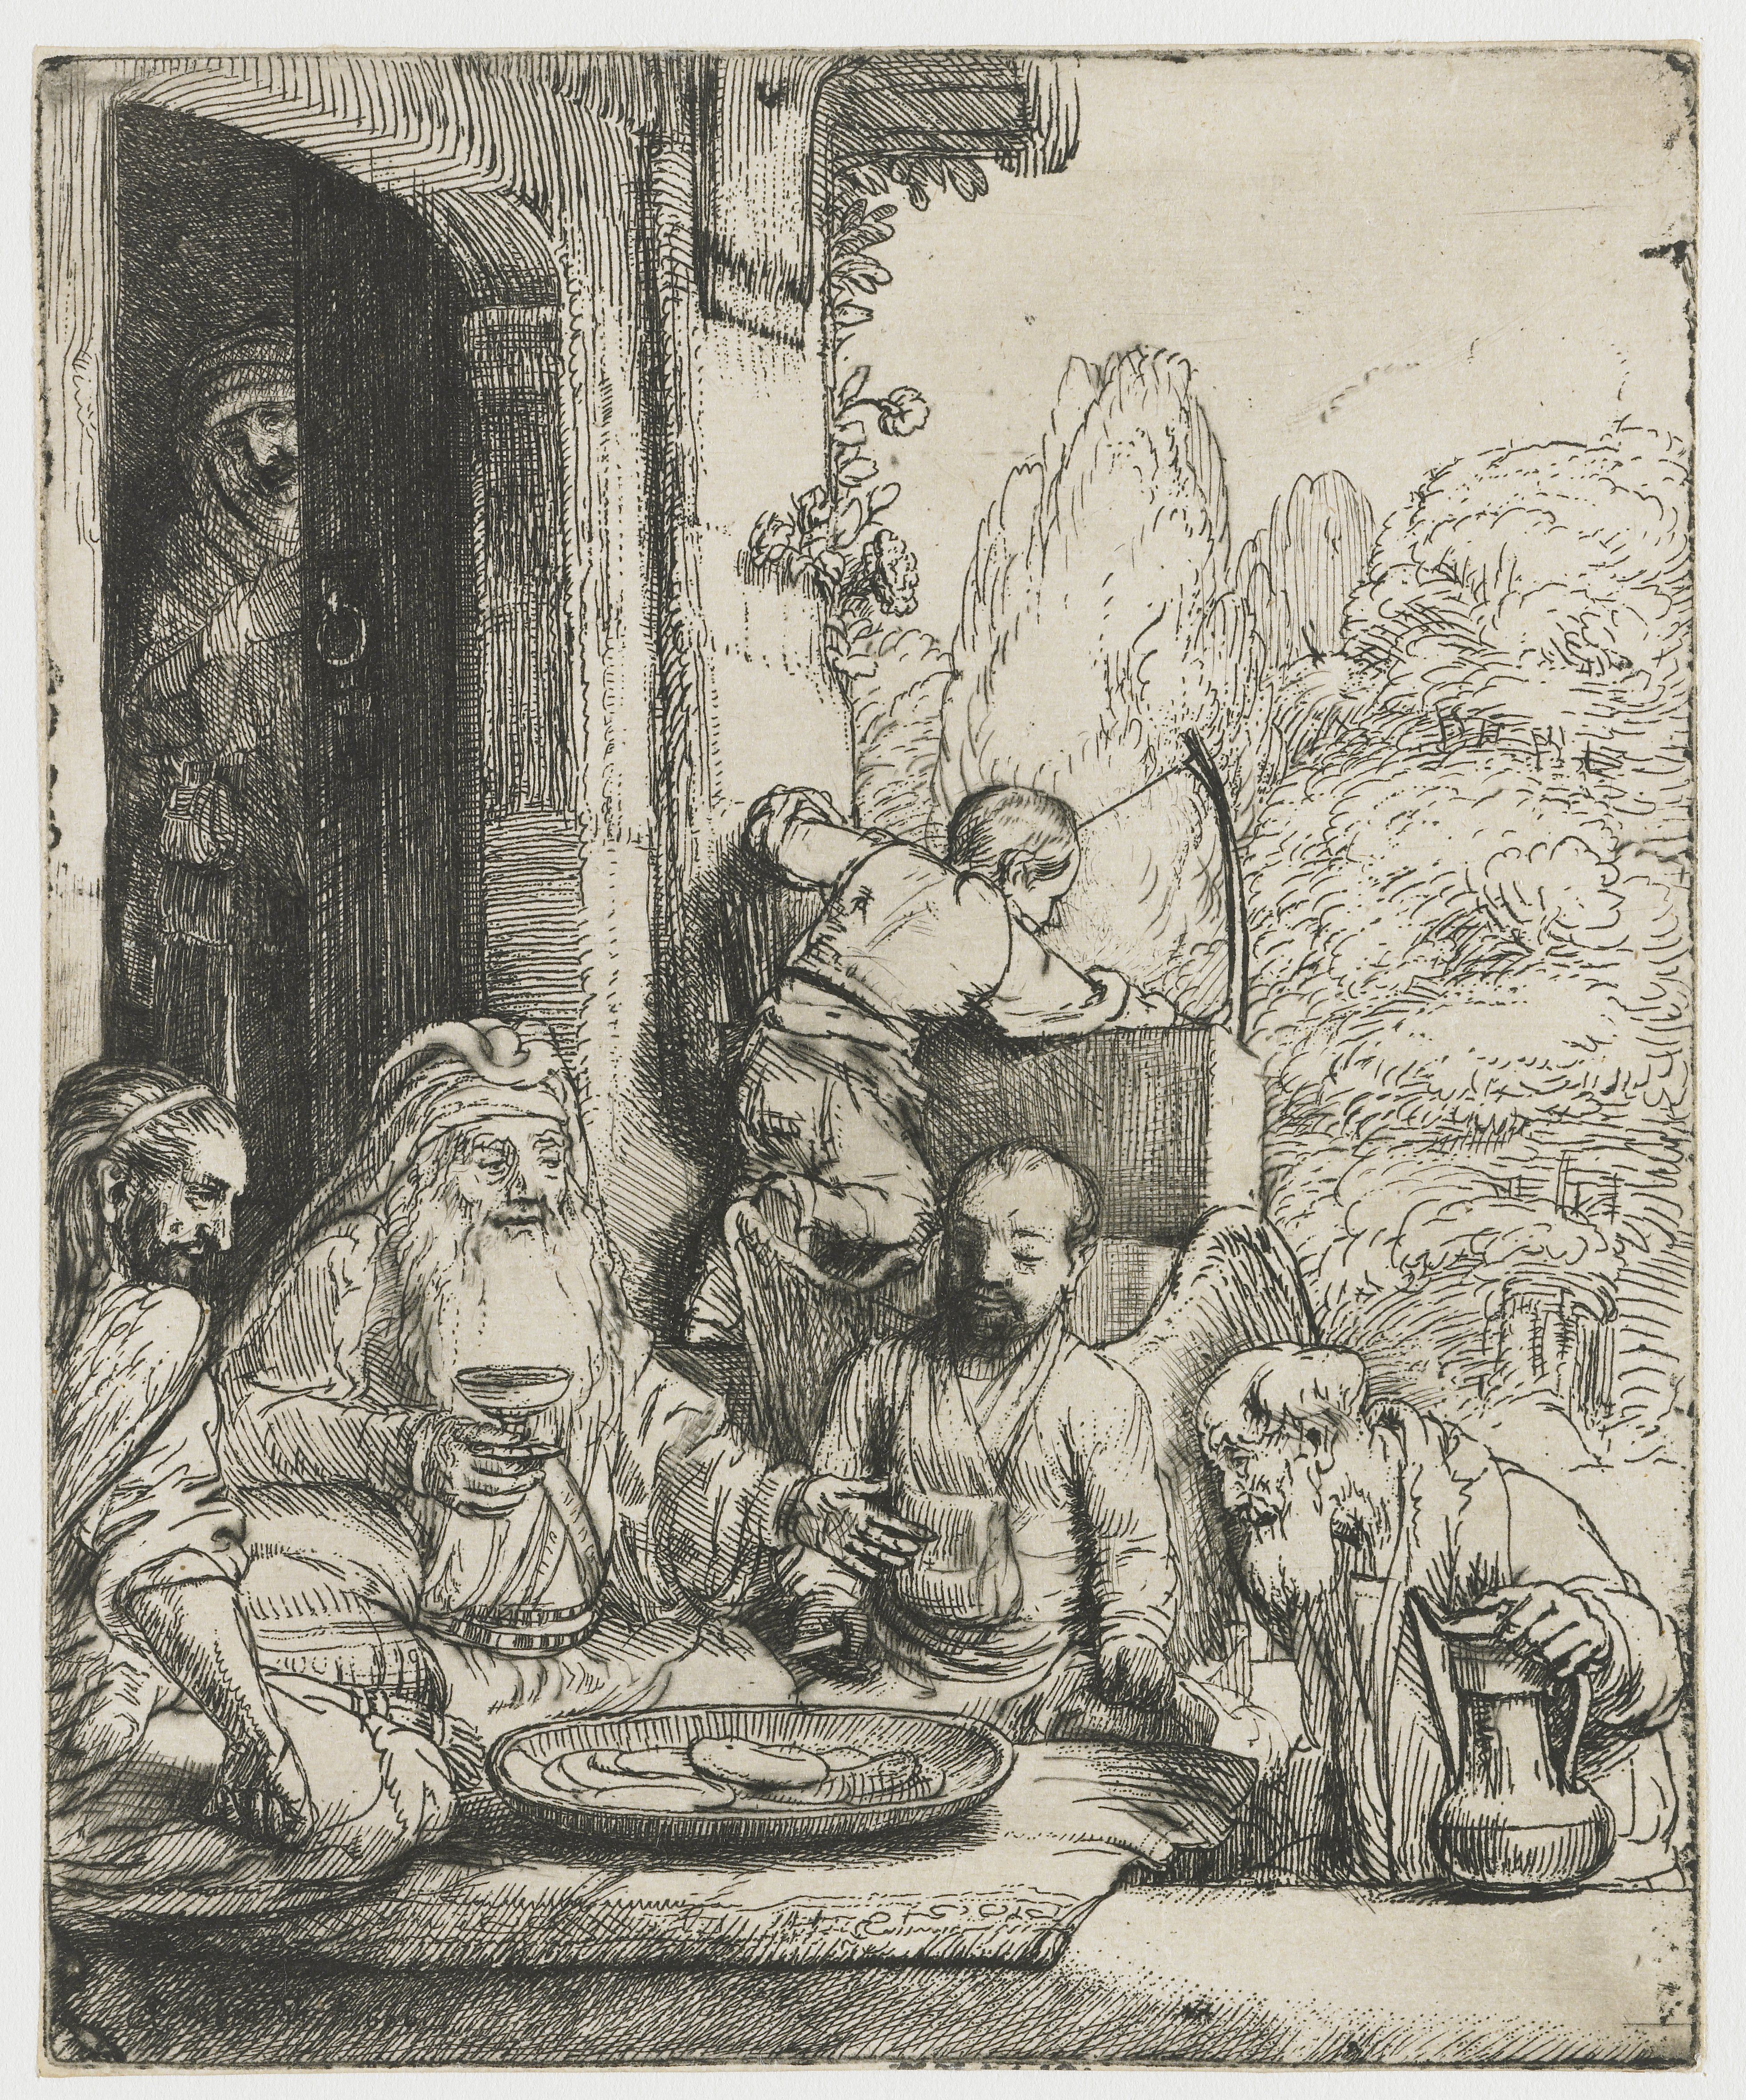 http://upload.wikimedia.org/wikipedia/commons/1/1c/B029_Rembrandt.jpg